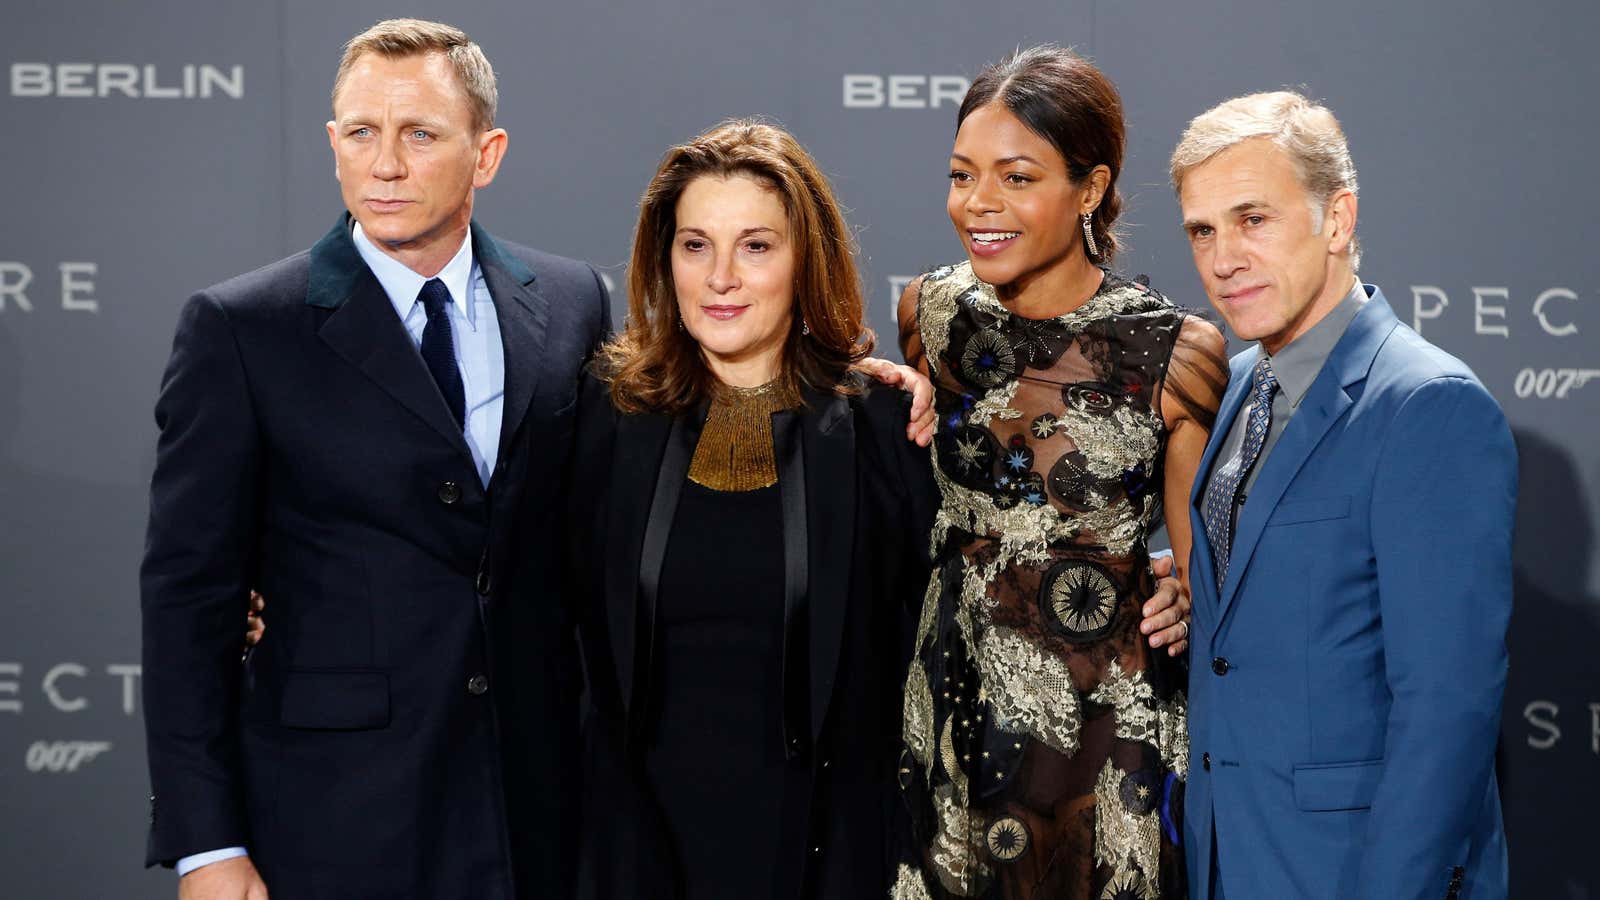 Daniel Craig, Barbara Broccoli, Naomie Harris and Christoph Waltz pose at the last Bond premiere in 2015.